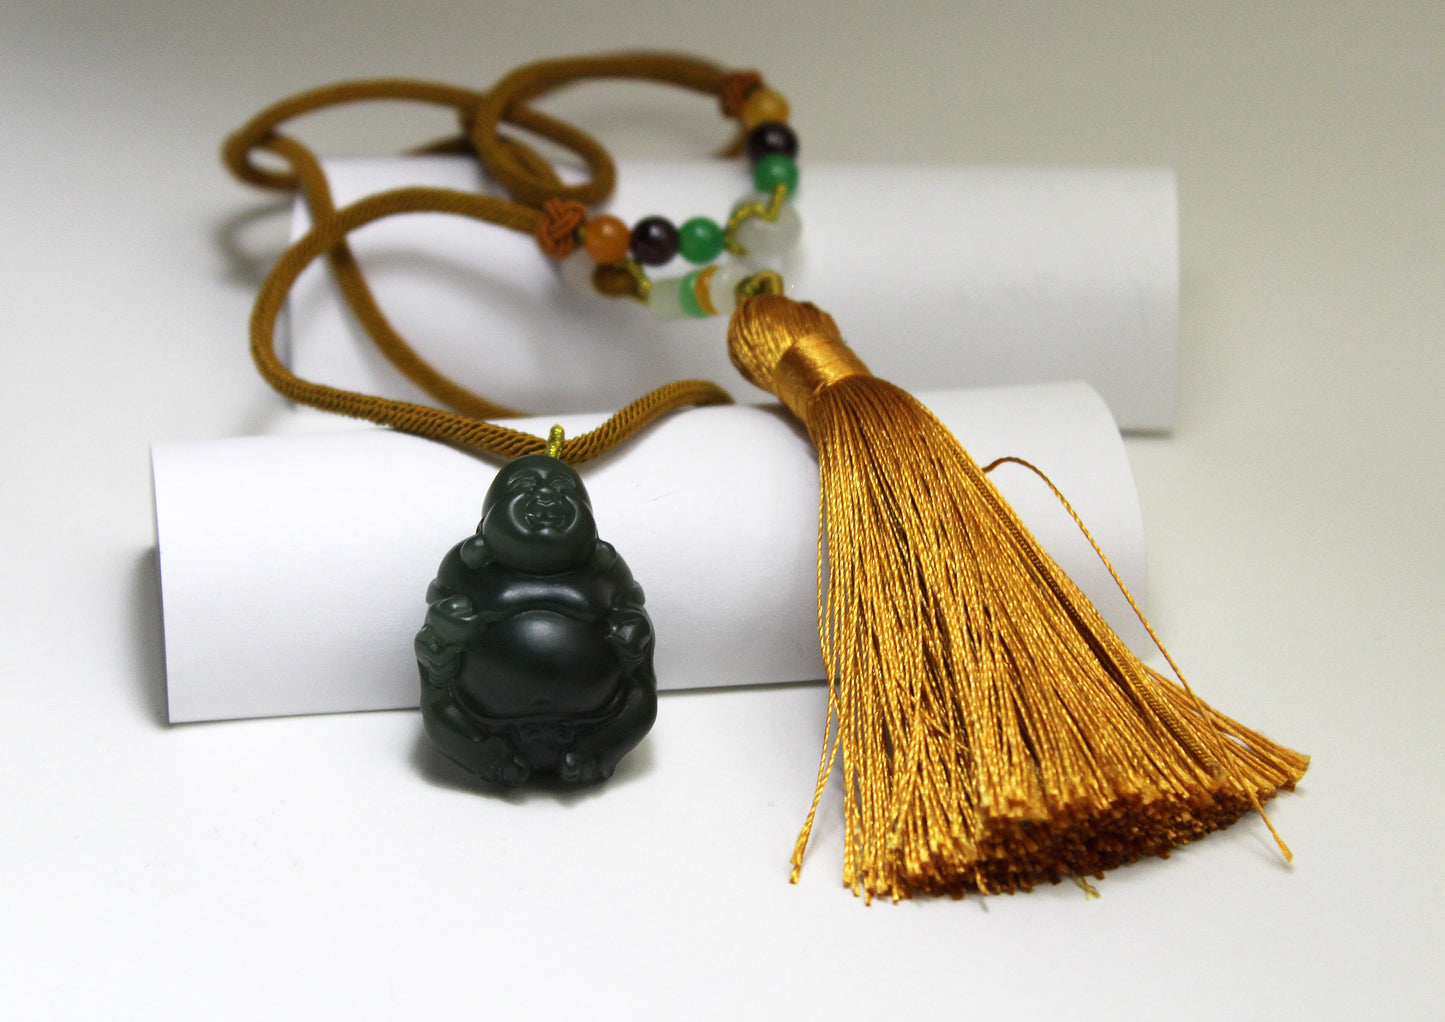 Green Jade Carved Buddha Amulet/Pendant 和田玉绿佛公吊坠